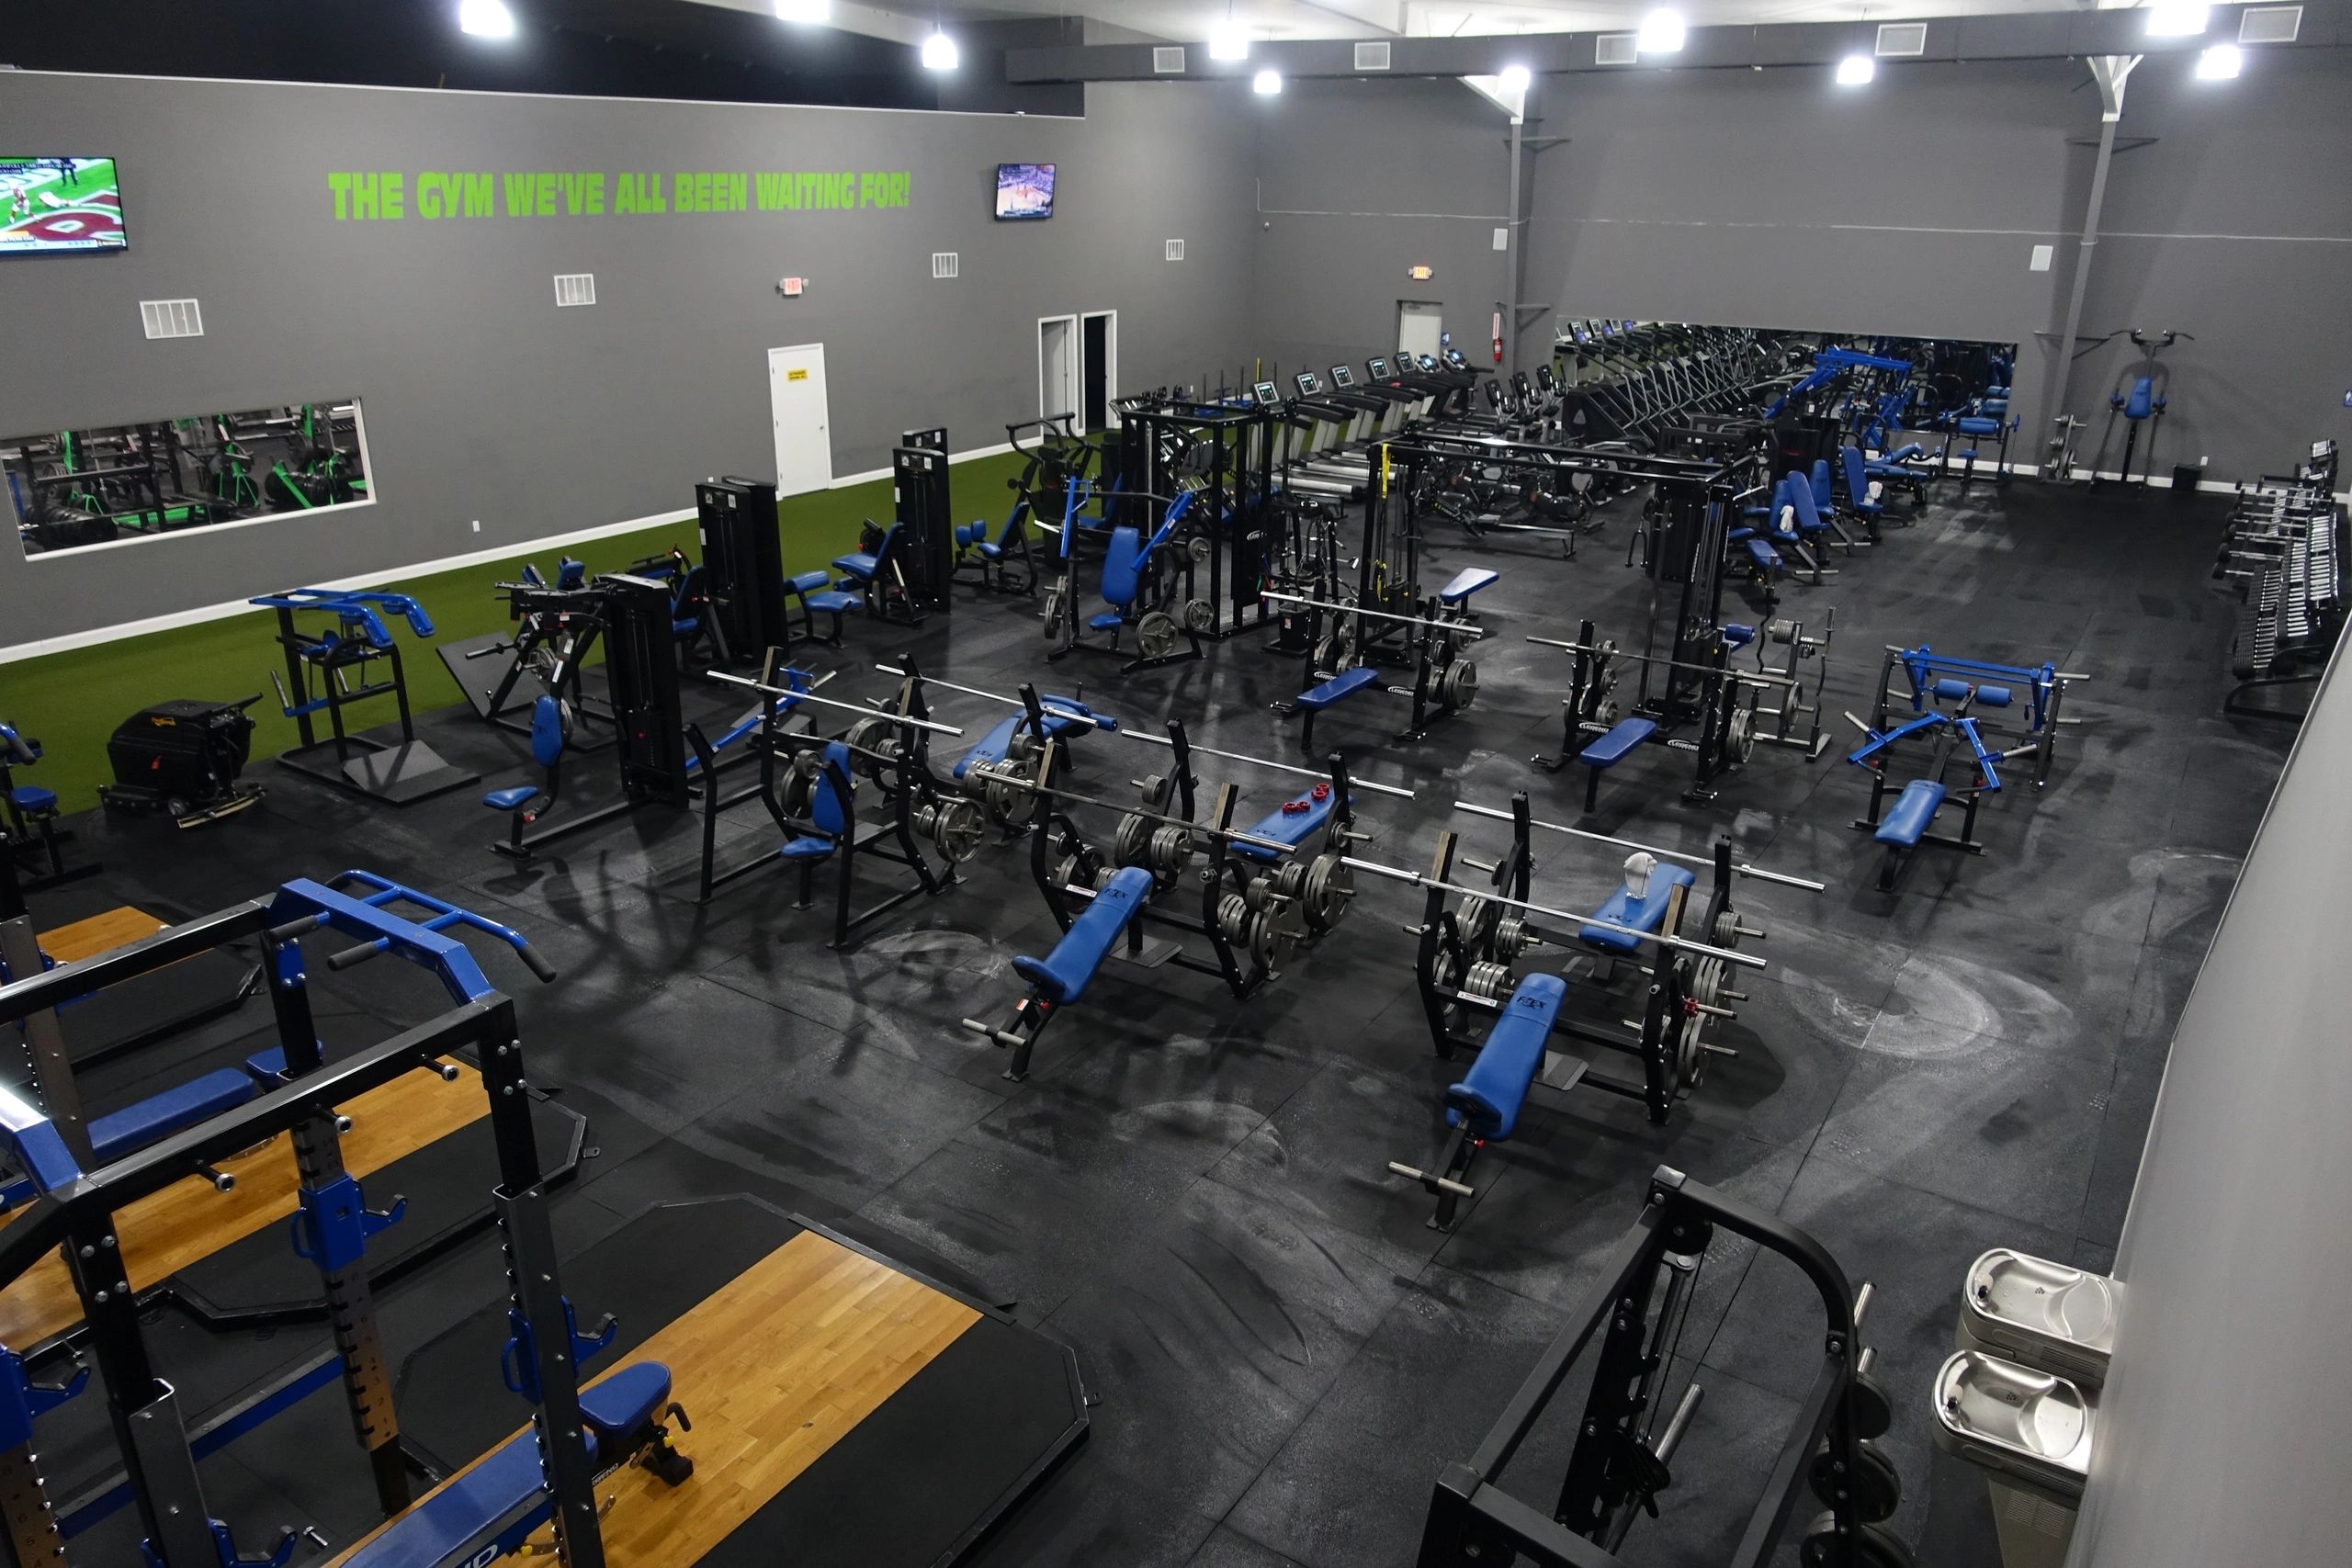 Florida Extreme Fitness Center - Gym, Personal Training